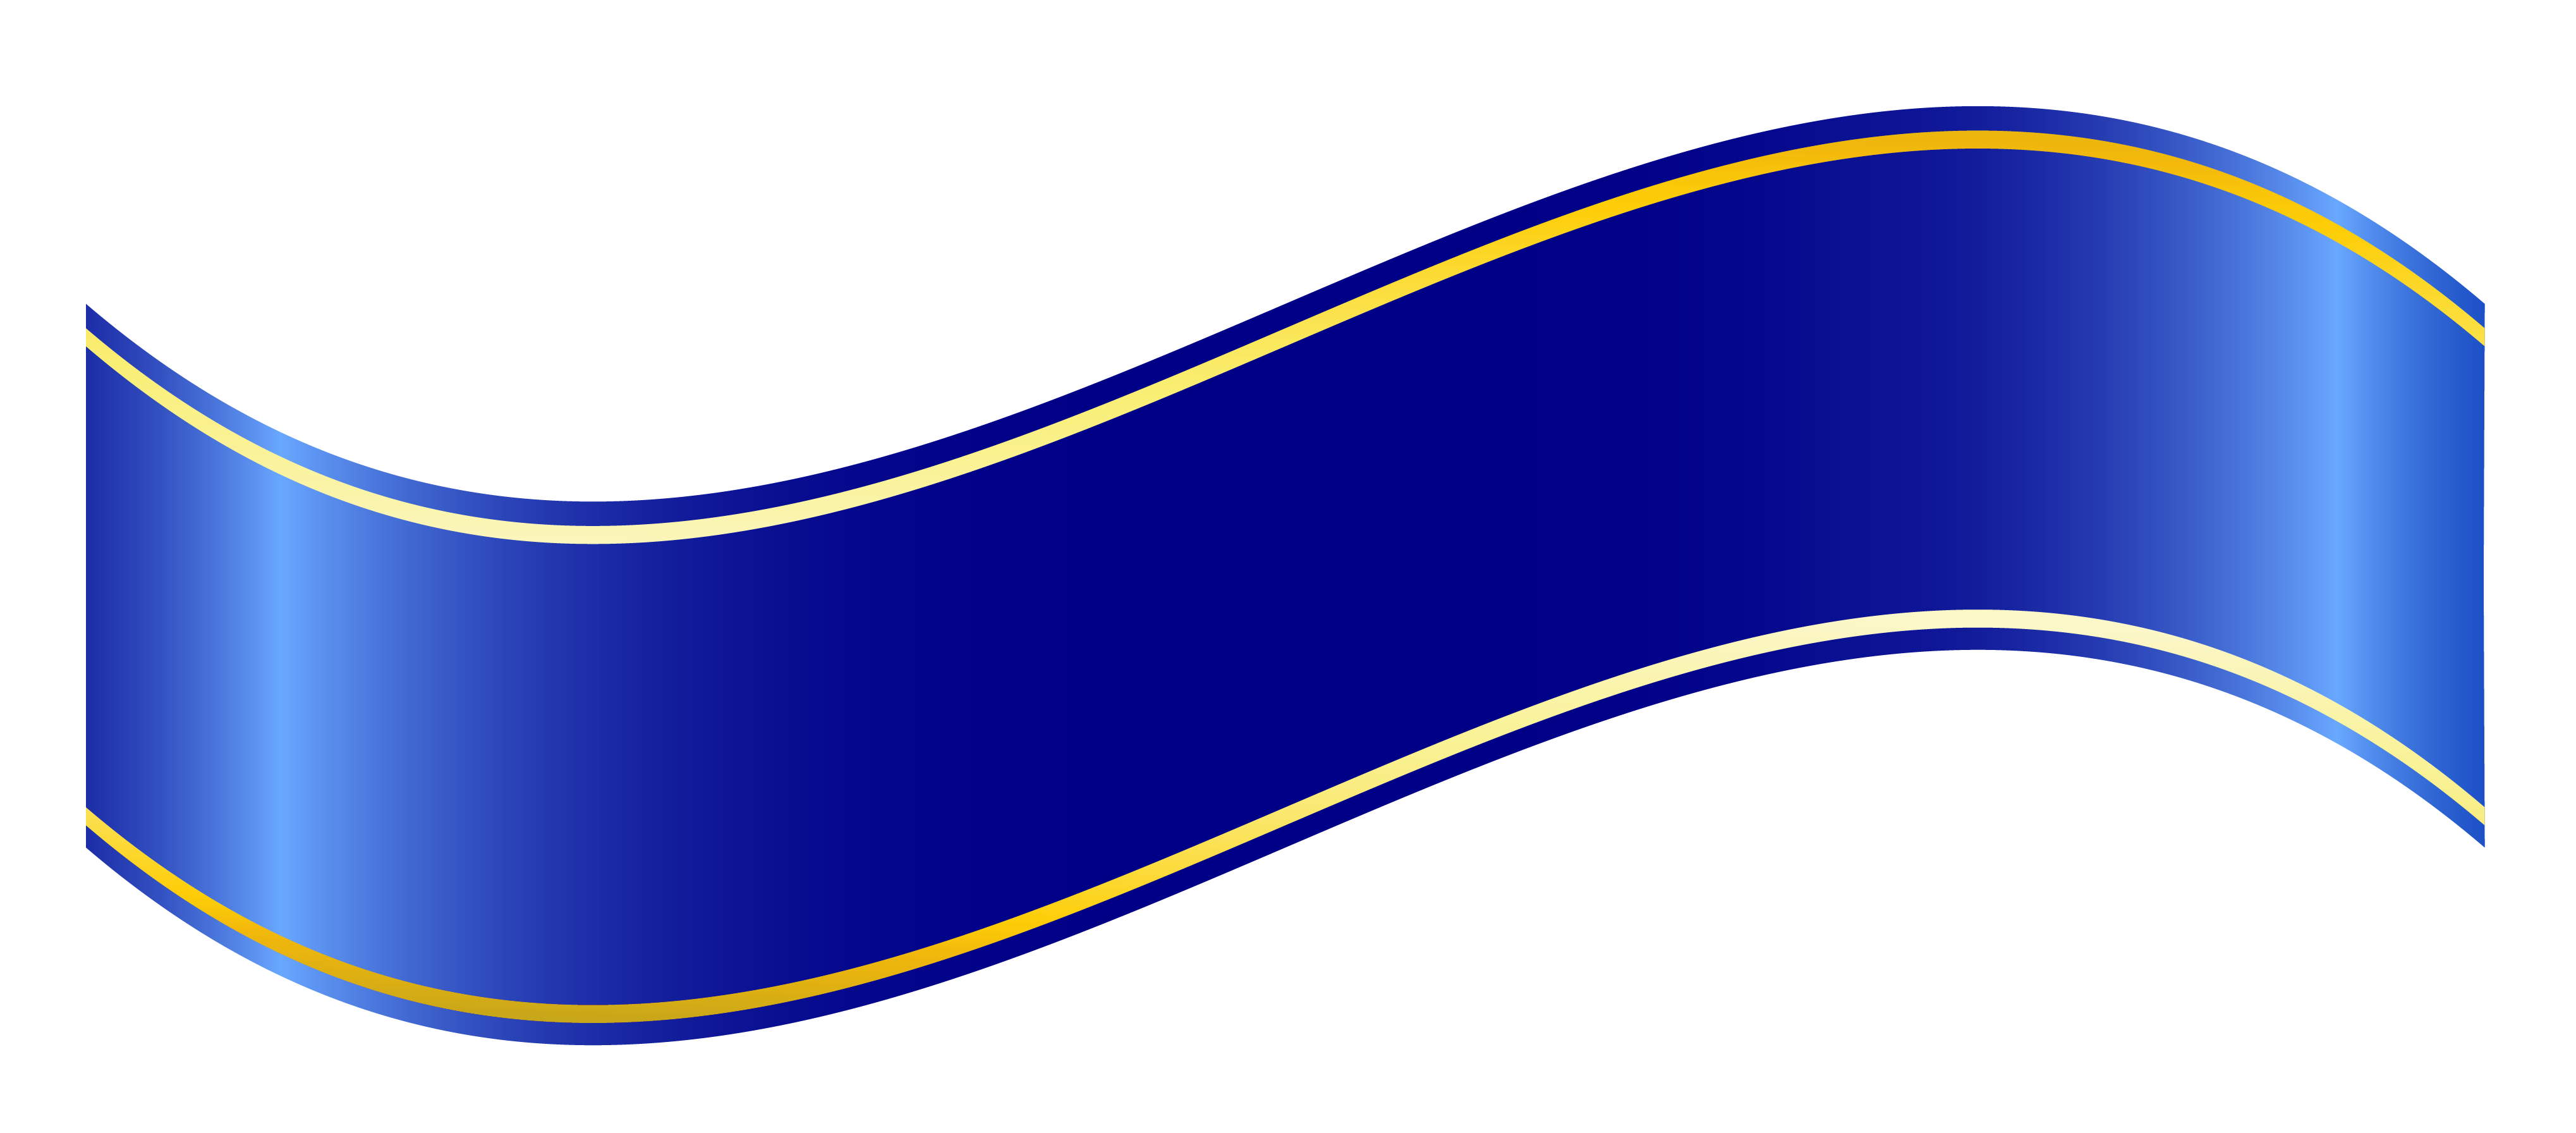 Blue Ribbon Banner PNG Transparent Images Free Download